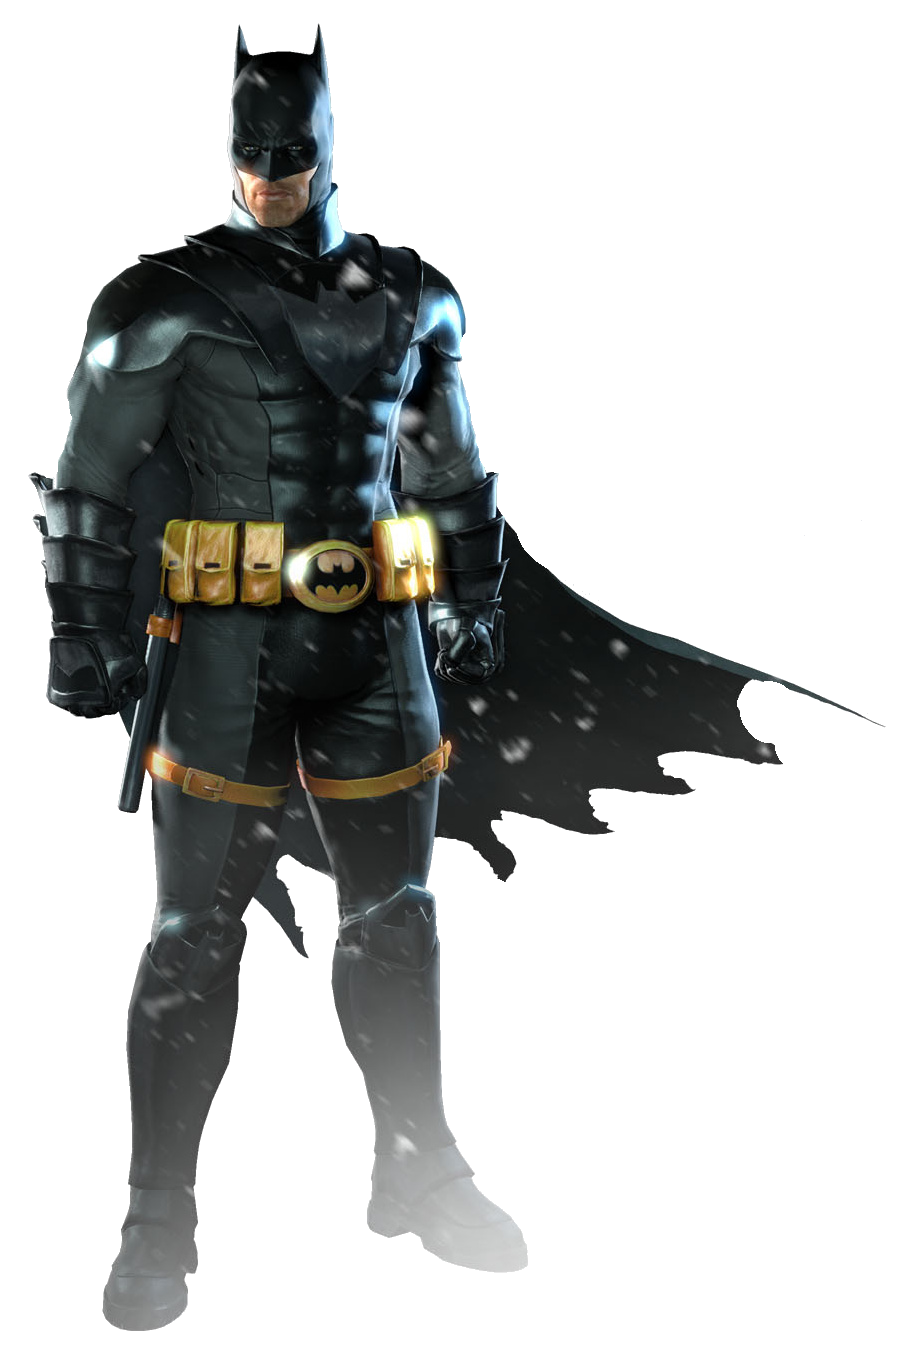 batman arkham origins earth 2 dark knight skin